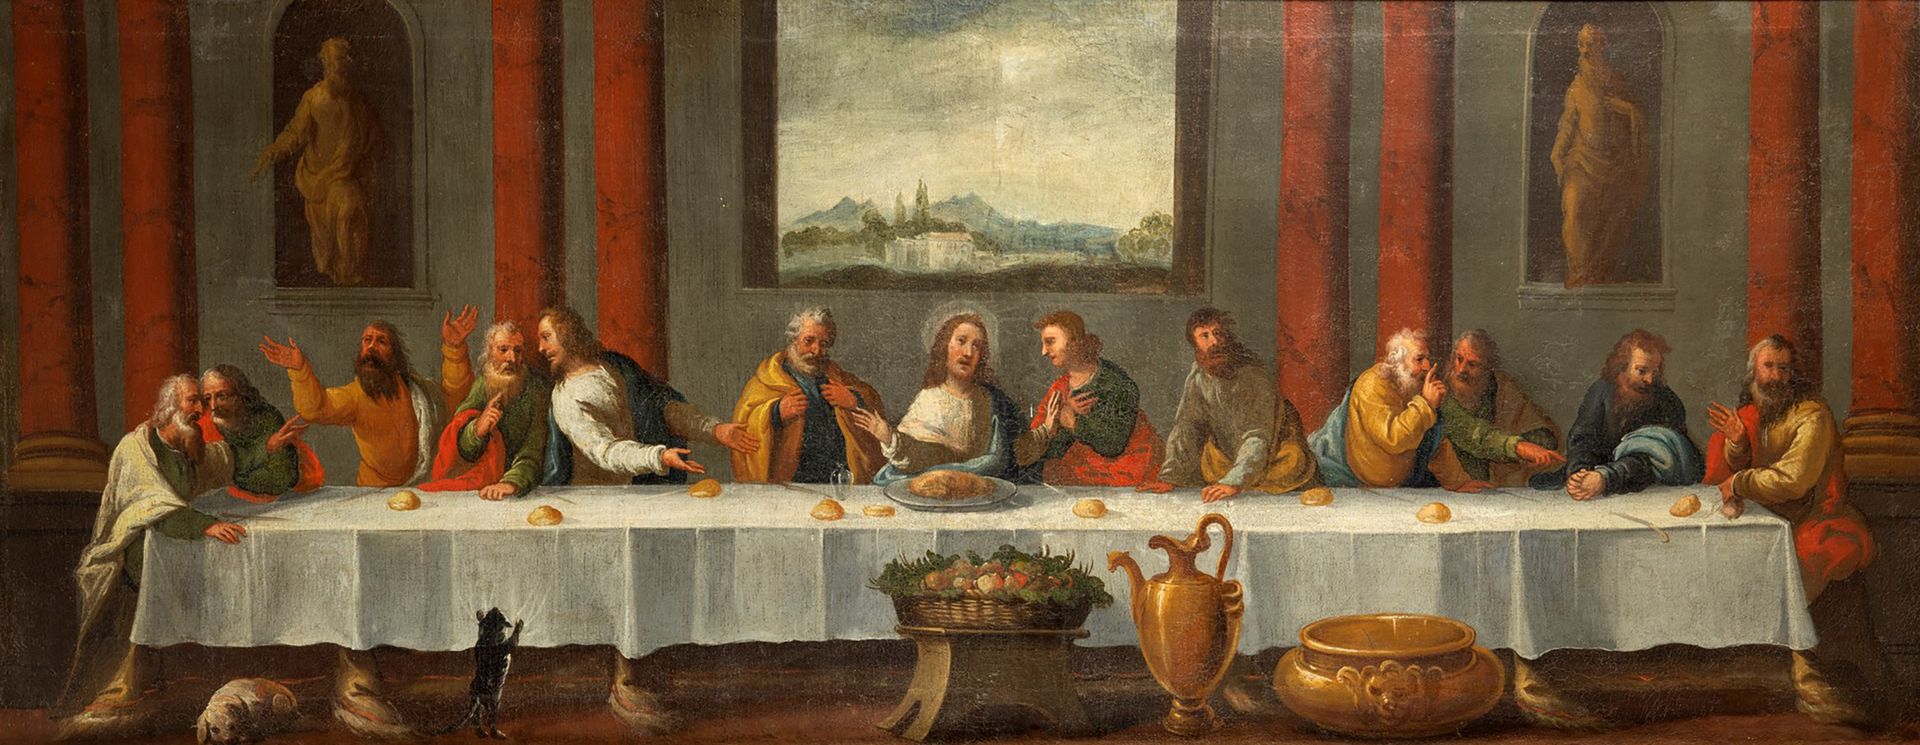 Null 定居的意大利学校，第十七世纪--最后的晚餐

布面油画
56.5 x 144厘米